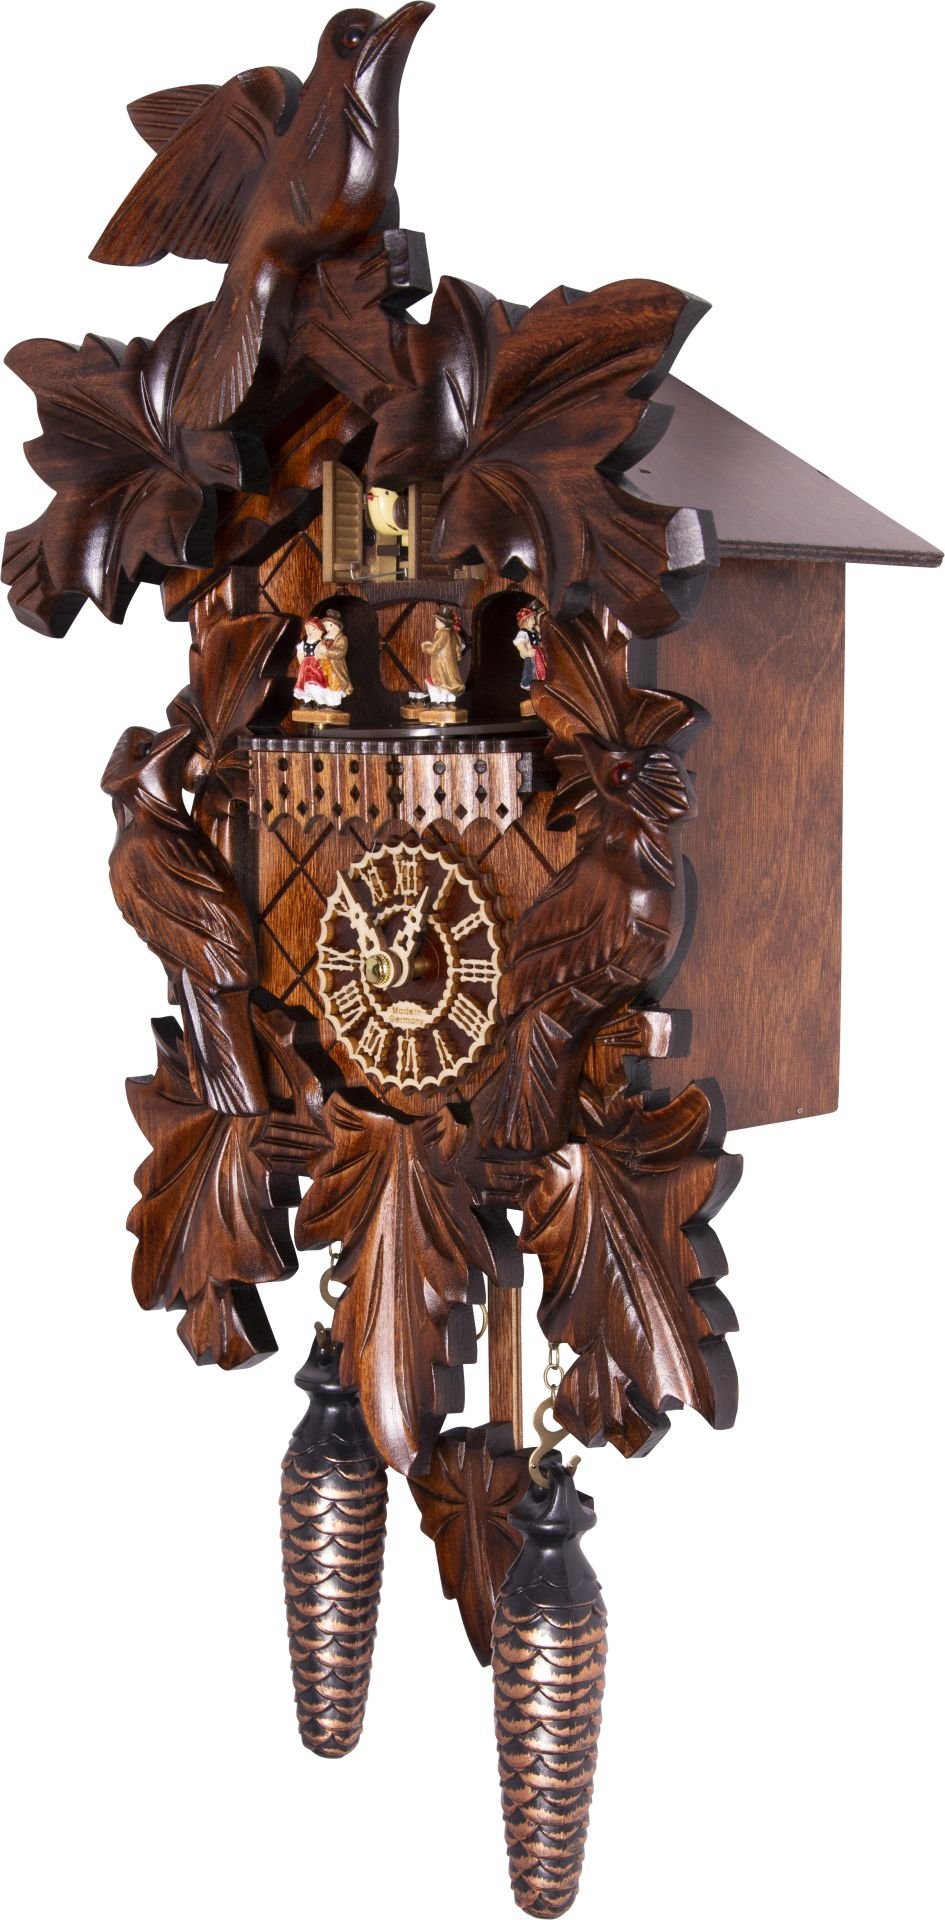 Reloj de cuco estilo “Madera tallada” de cuarzo 35cm de Trenkle Uhren